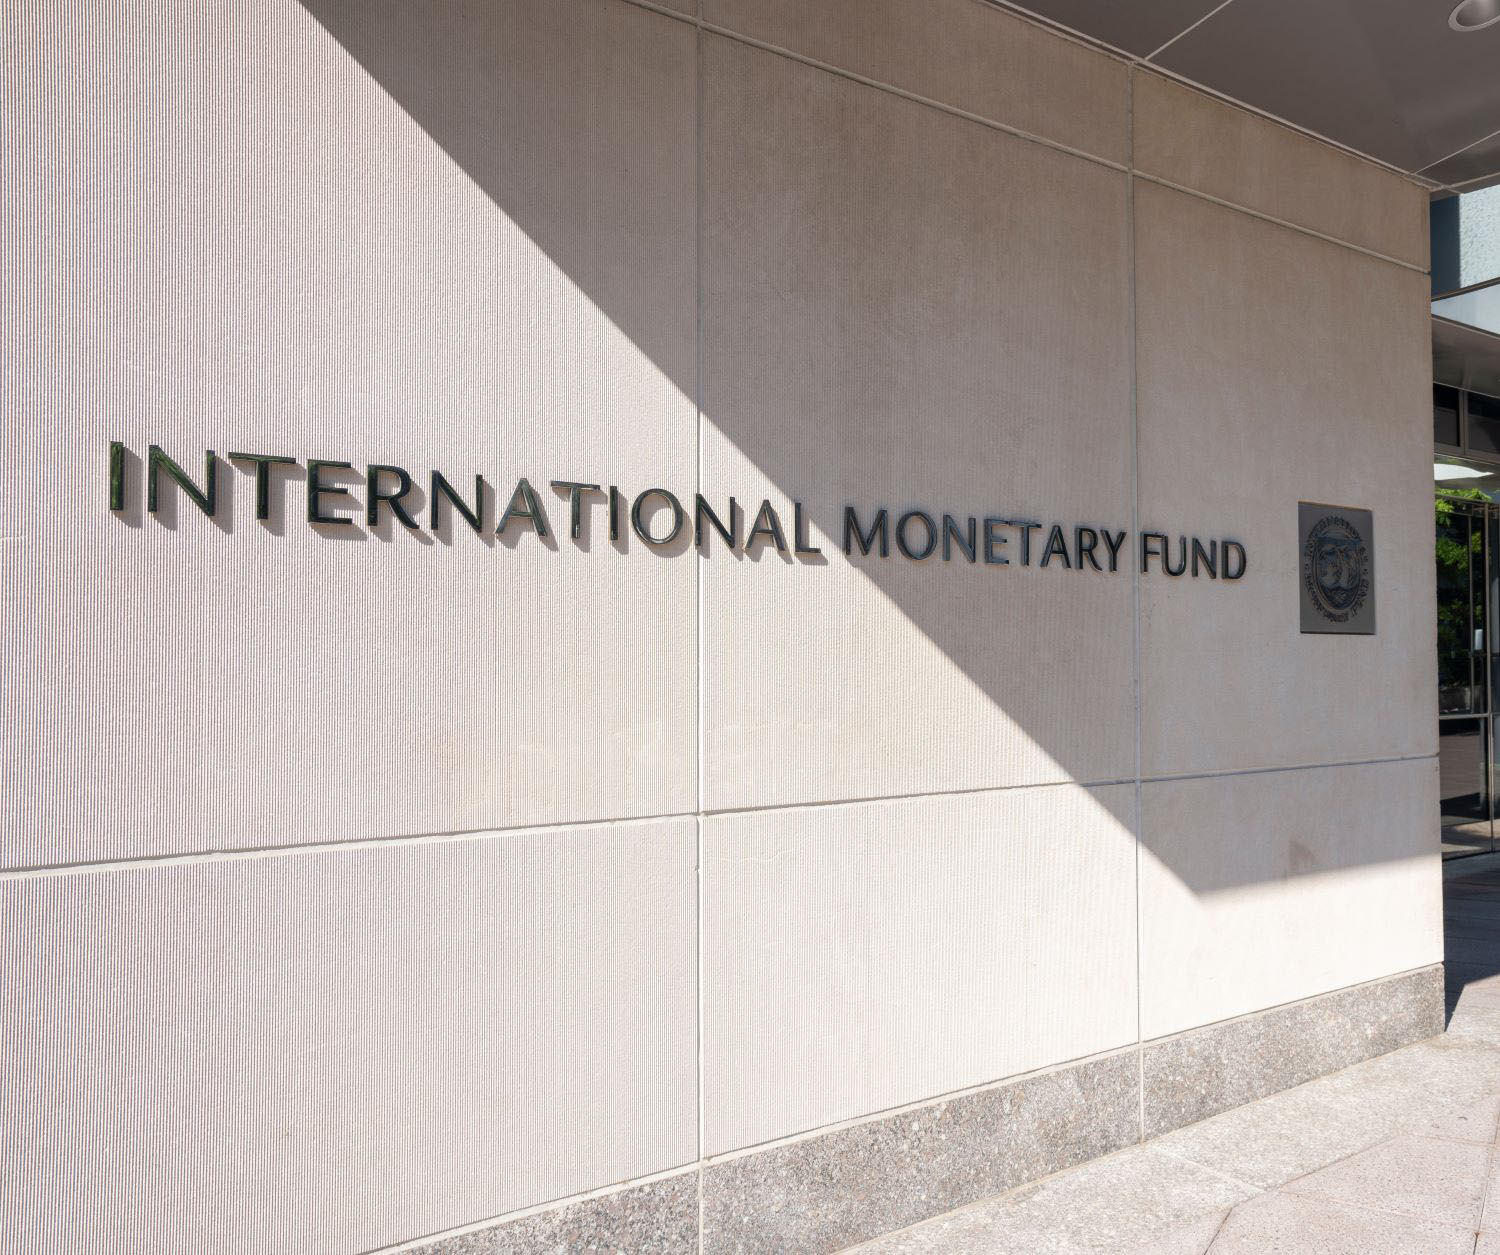 The entrance sign at the International Monetary Fund (IMF) headquarters in Washington, DC.